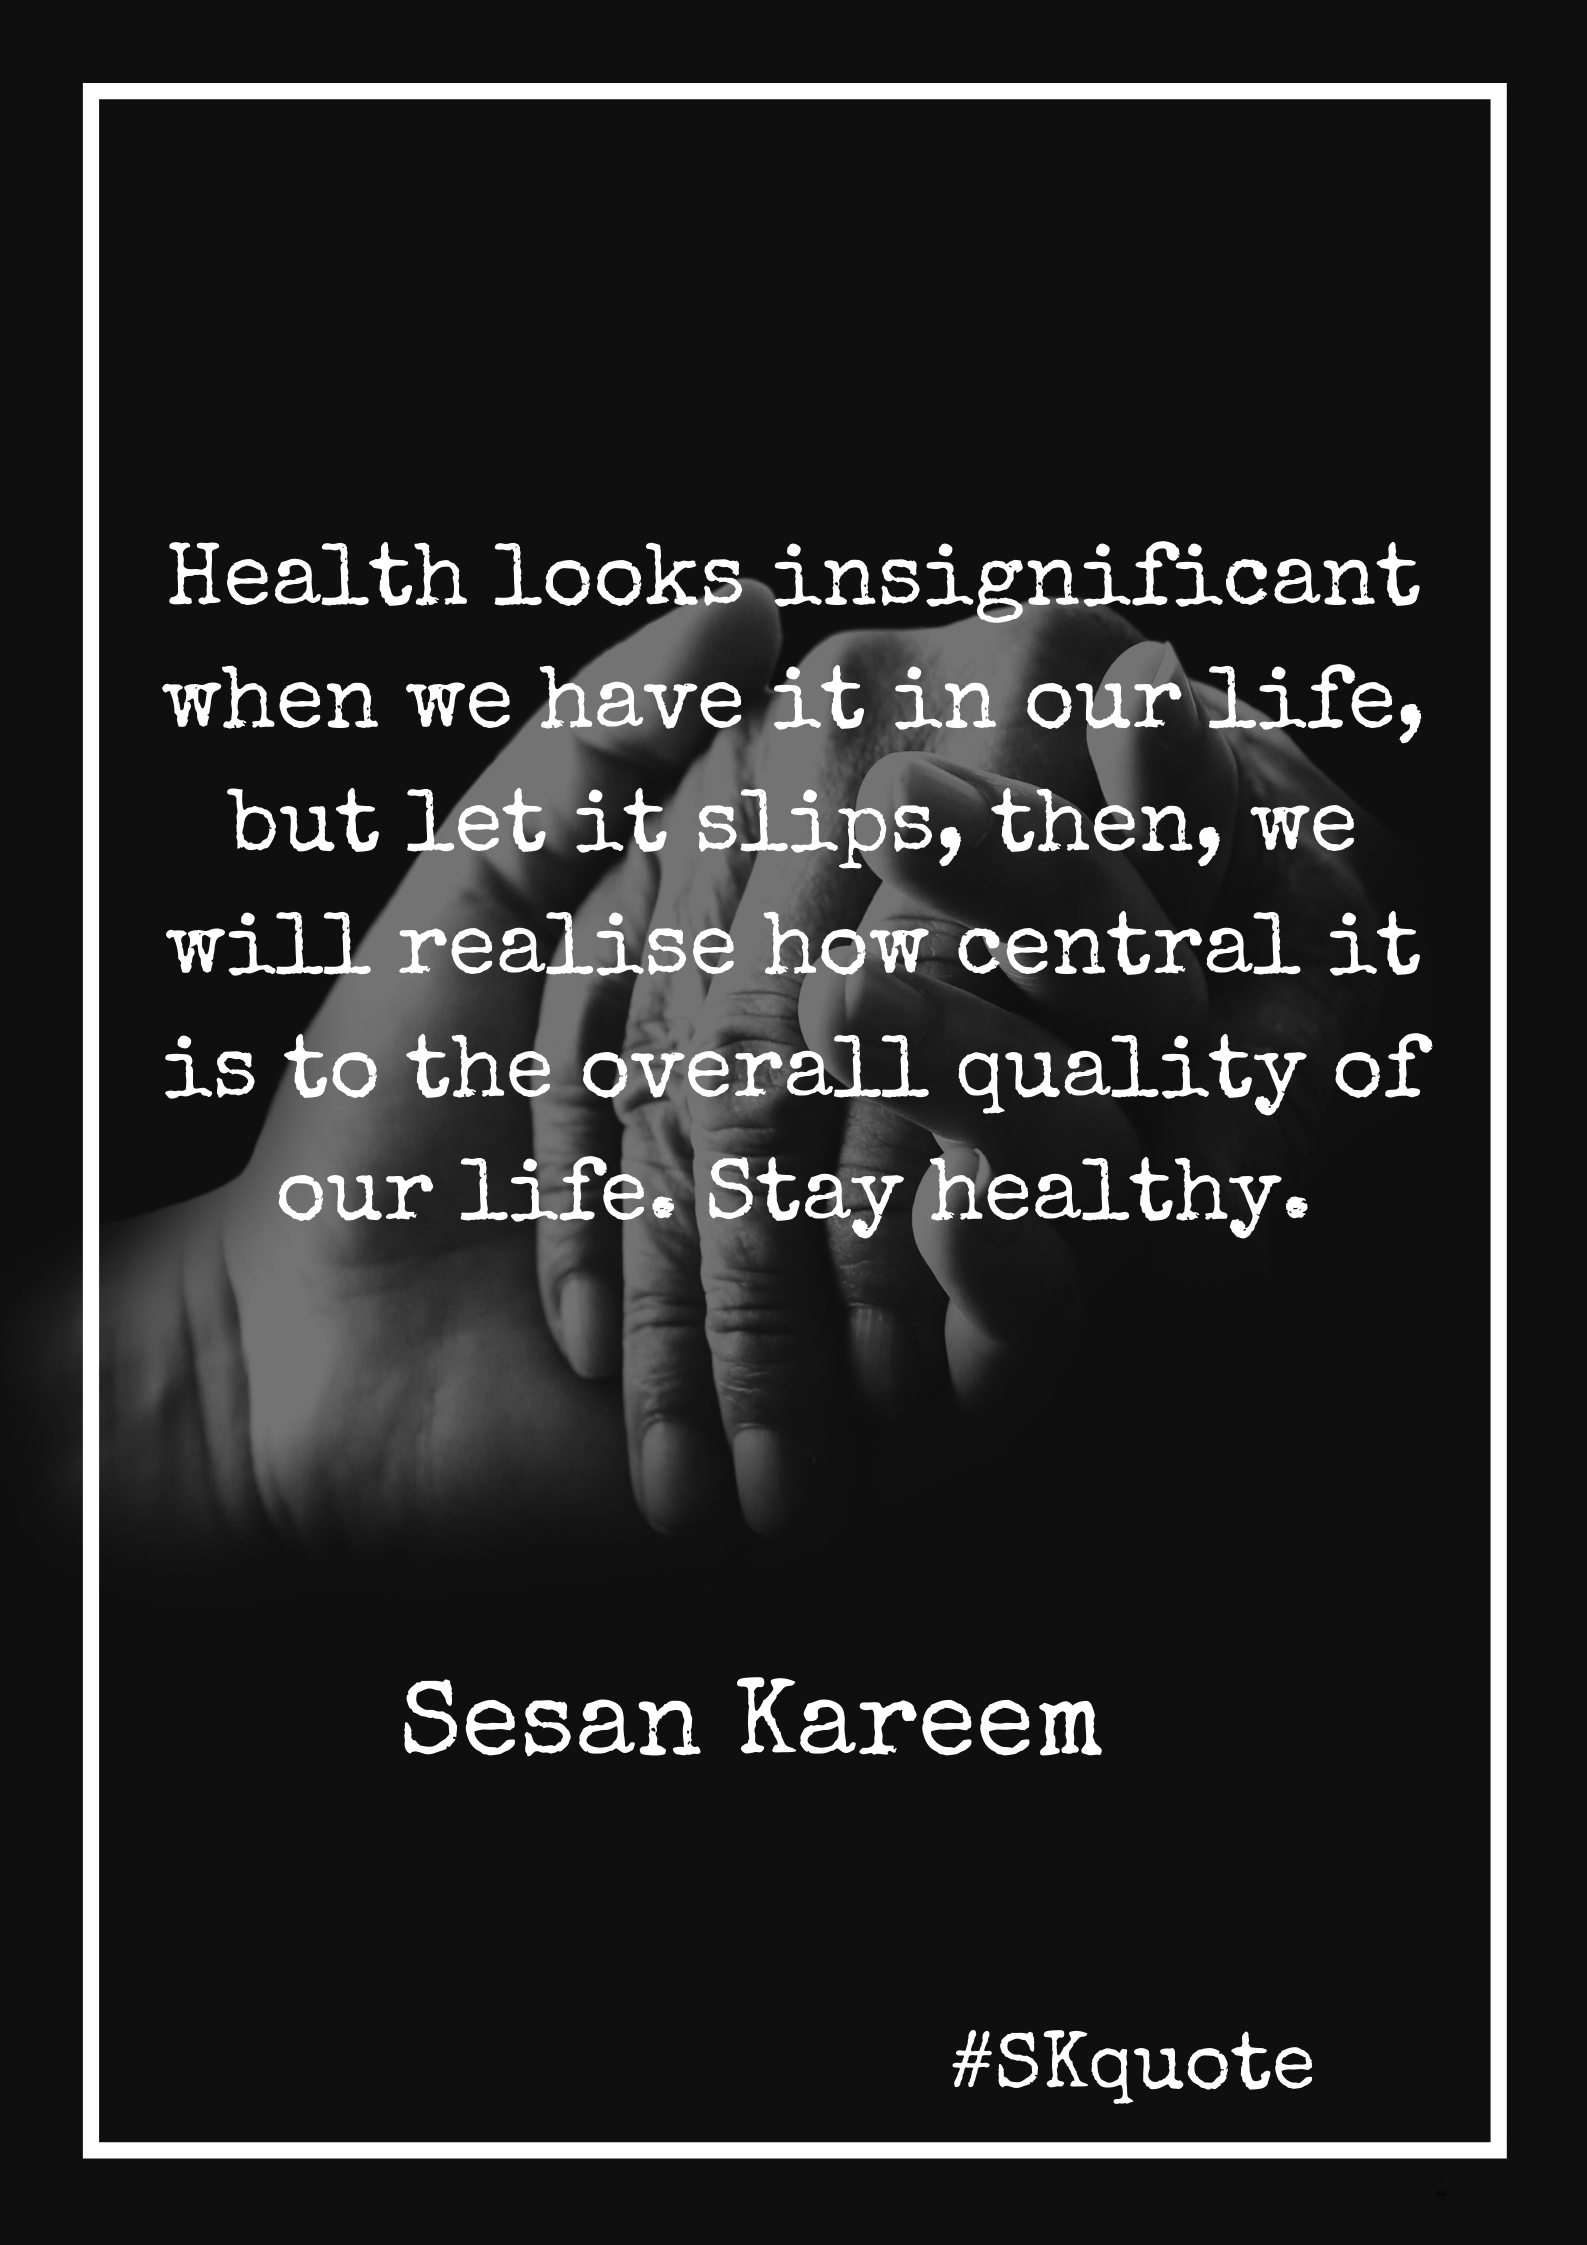 Sesan Kareem quote on health 